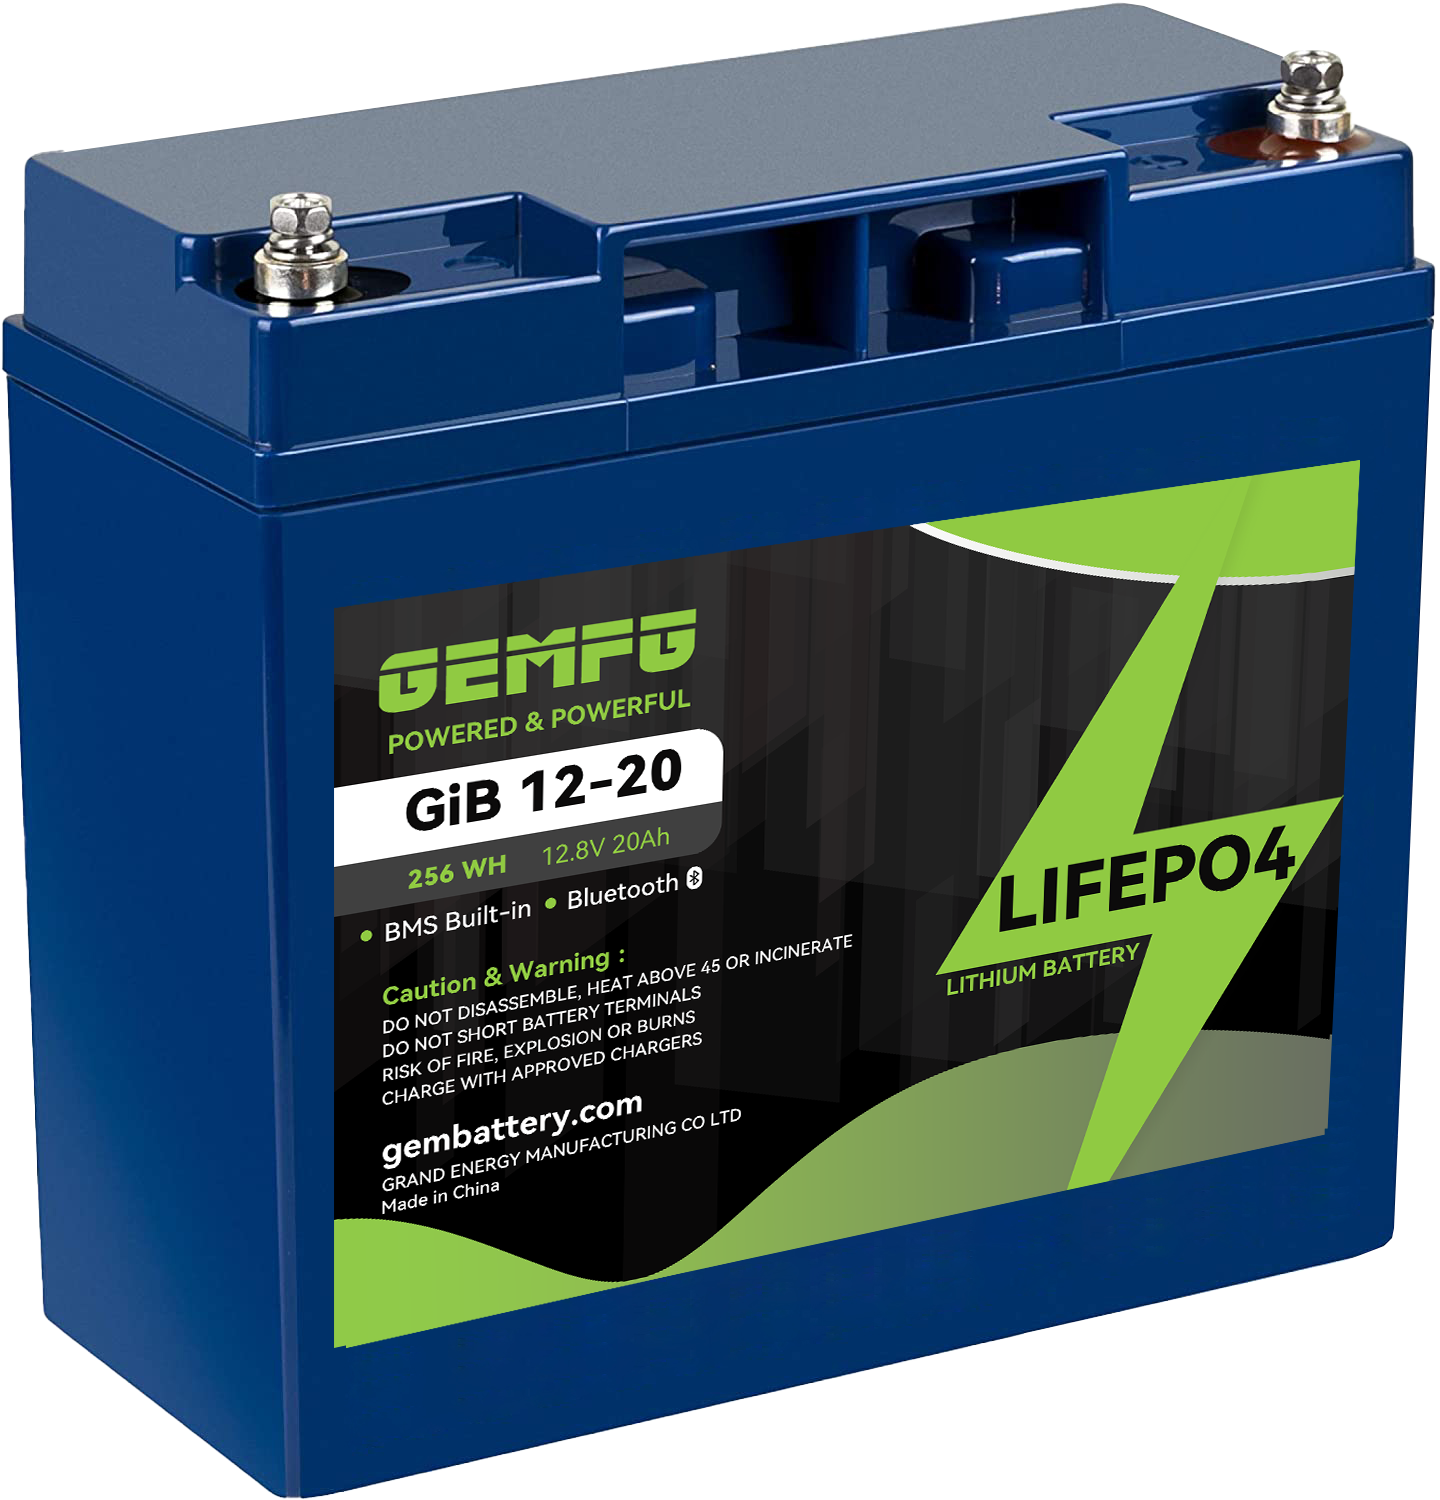 Batterie rechargeable 18650 3.7V 2600 mAh – GM-Equipement